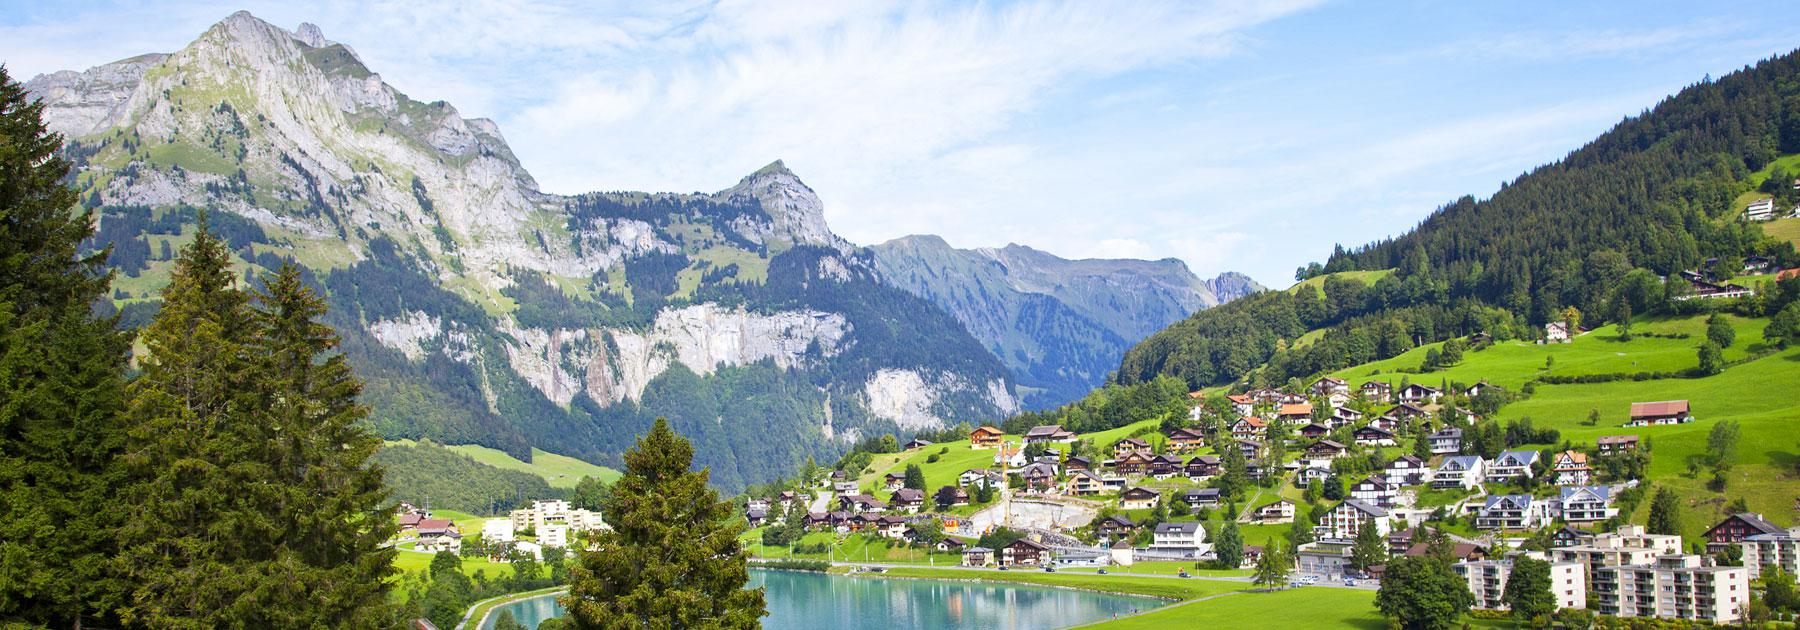 Switzerland Group Travel